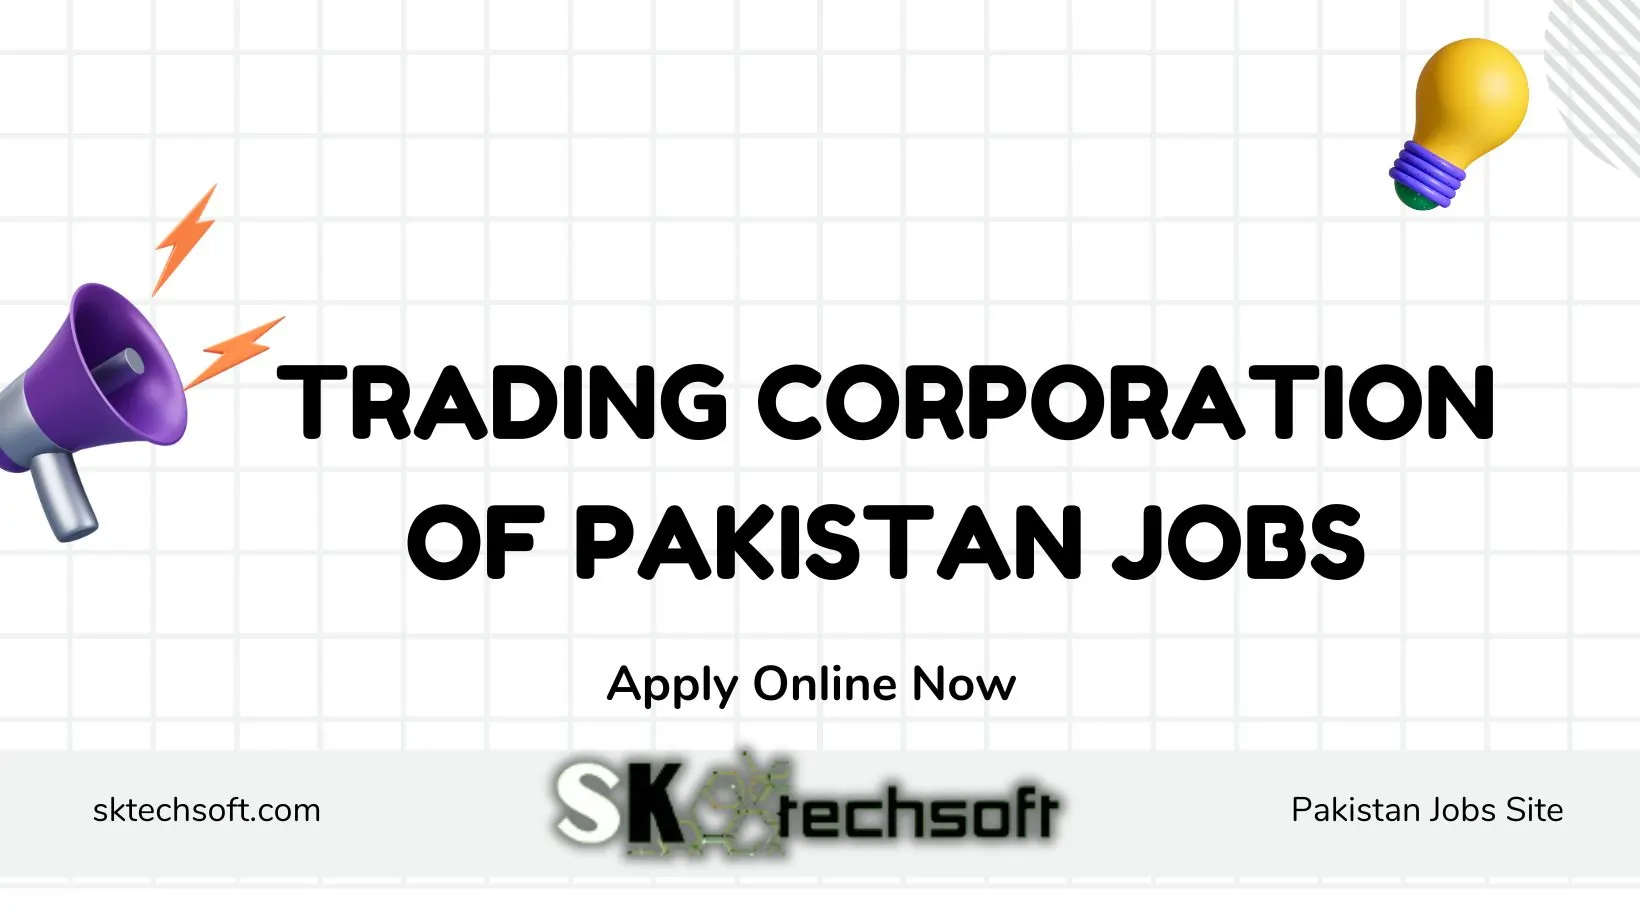 Trading Corporation of Pakistan jobs